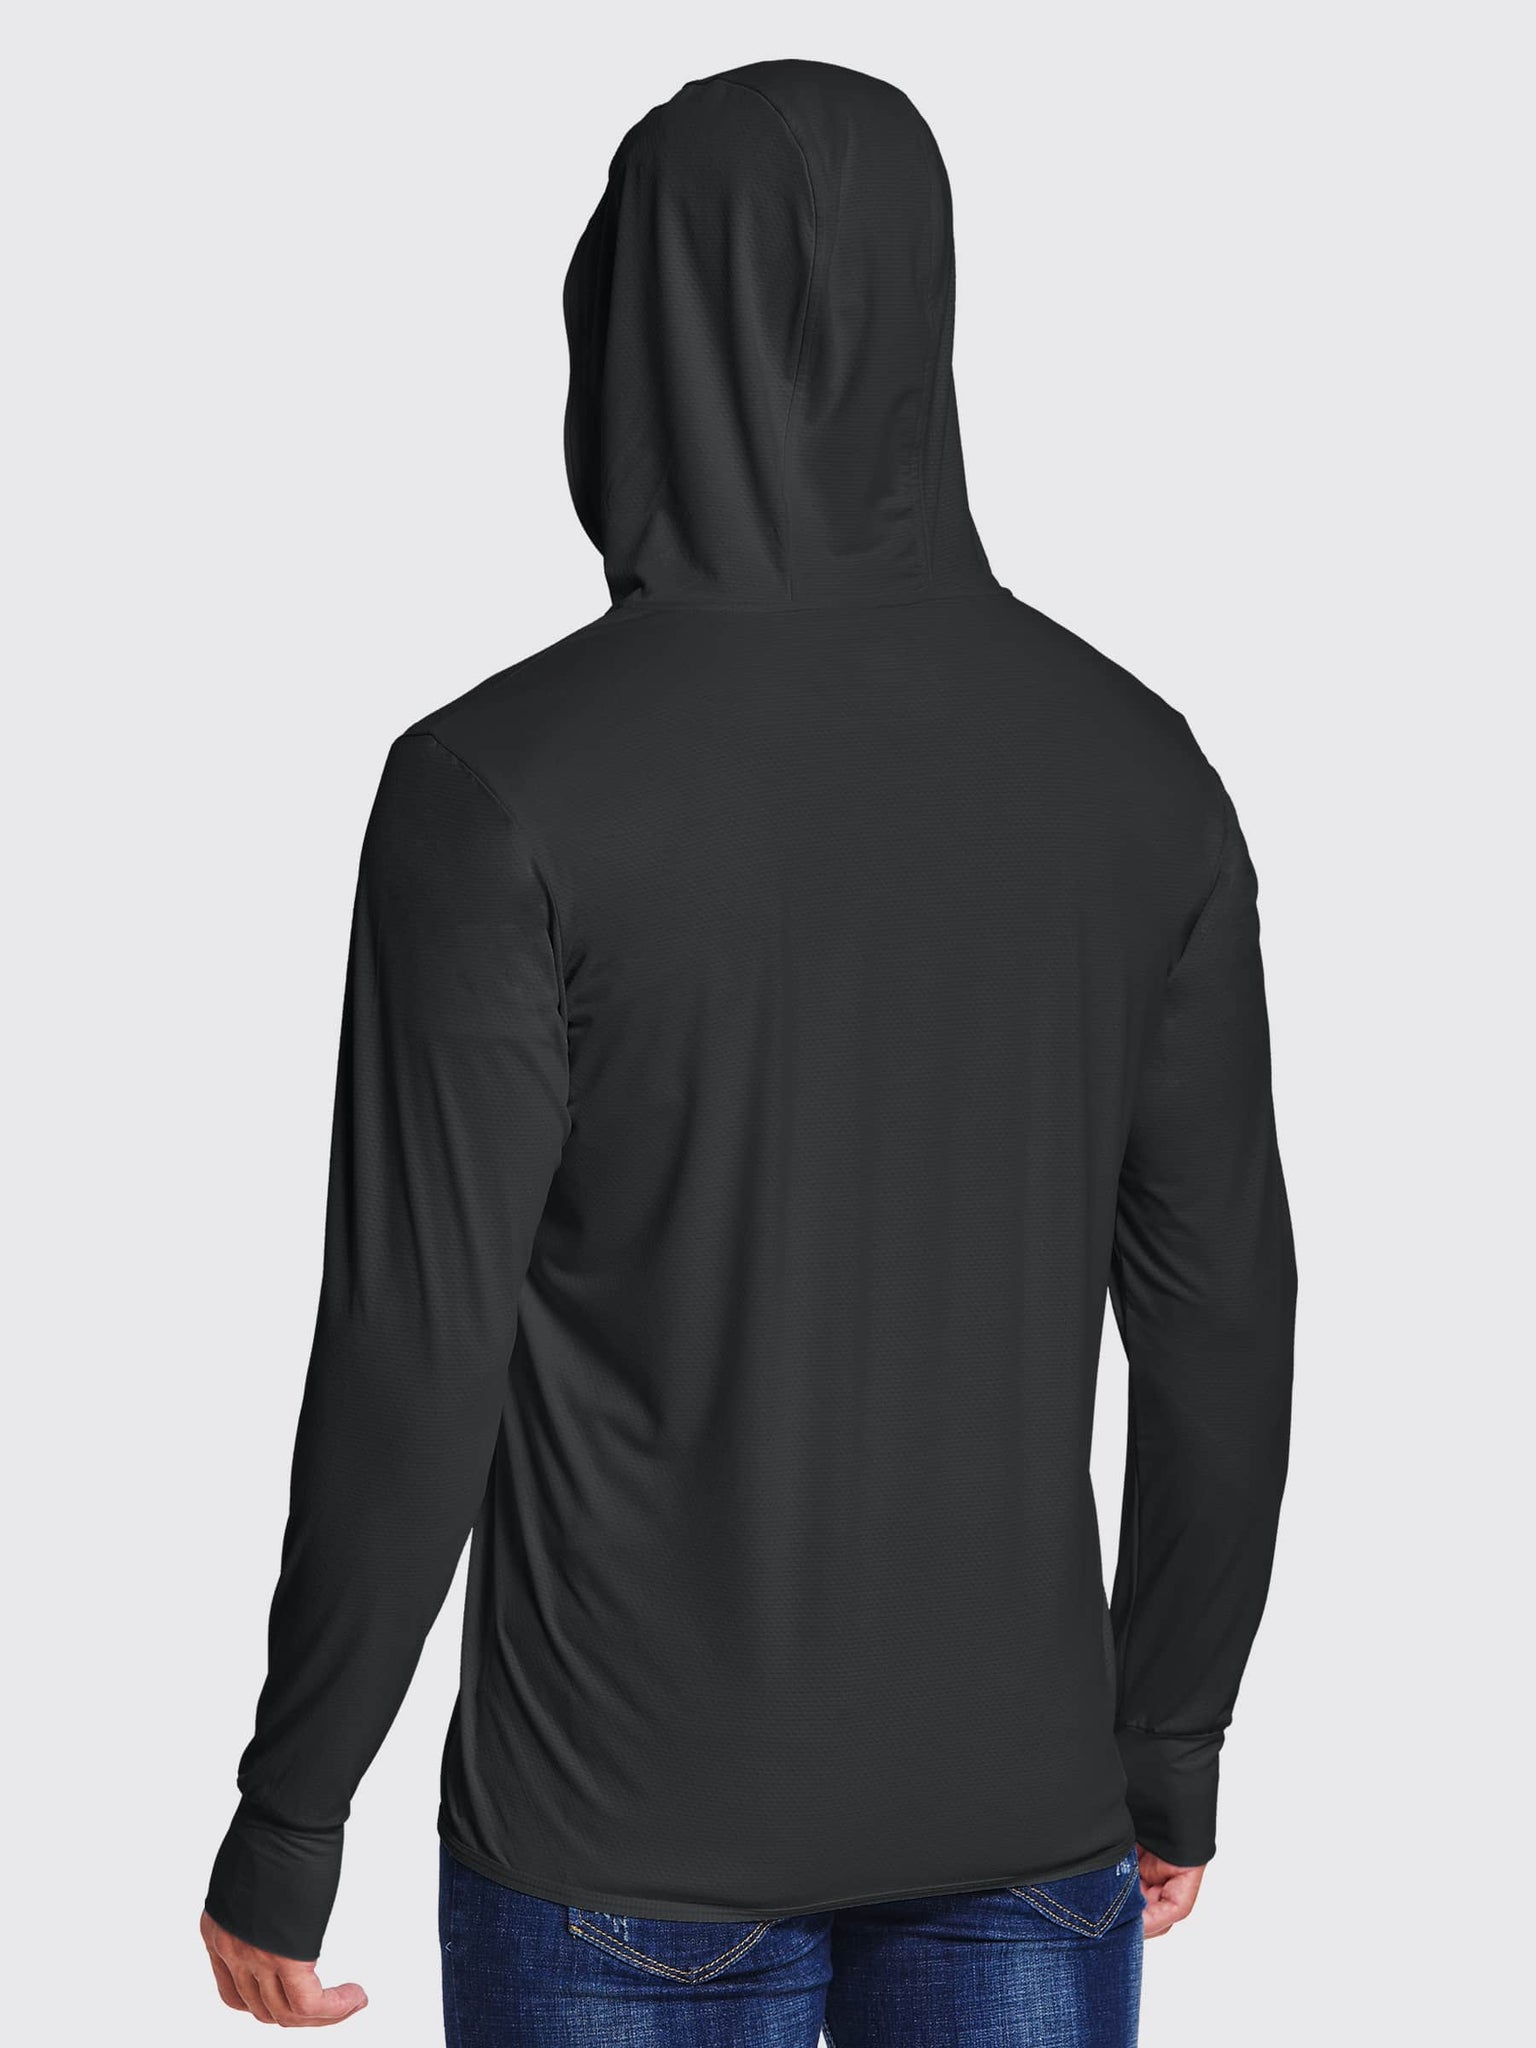 Willit Men's Sun Protection Jacket Full Zip_Black_model4